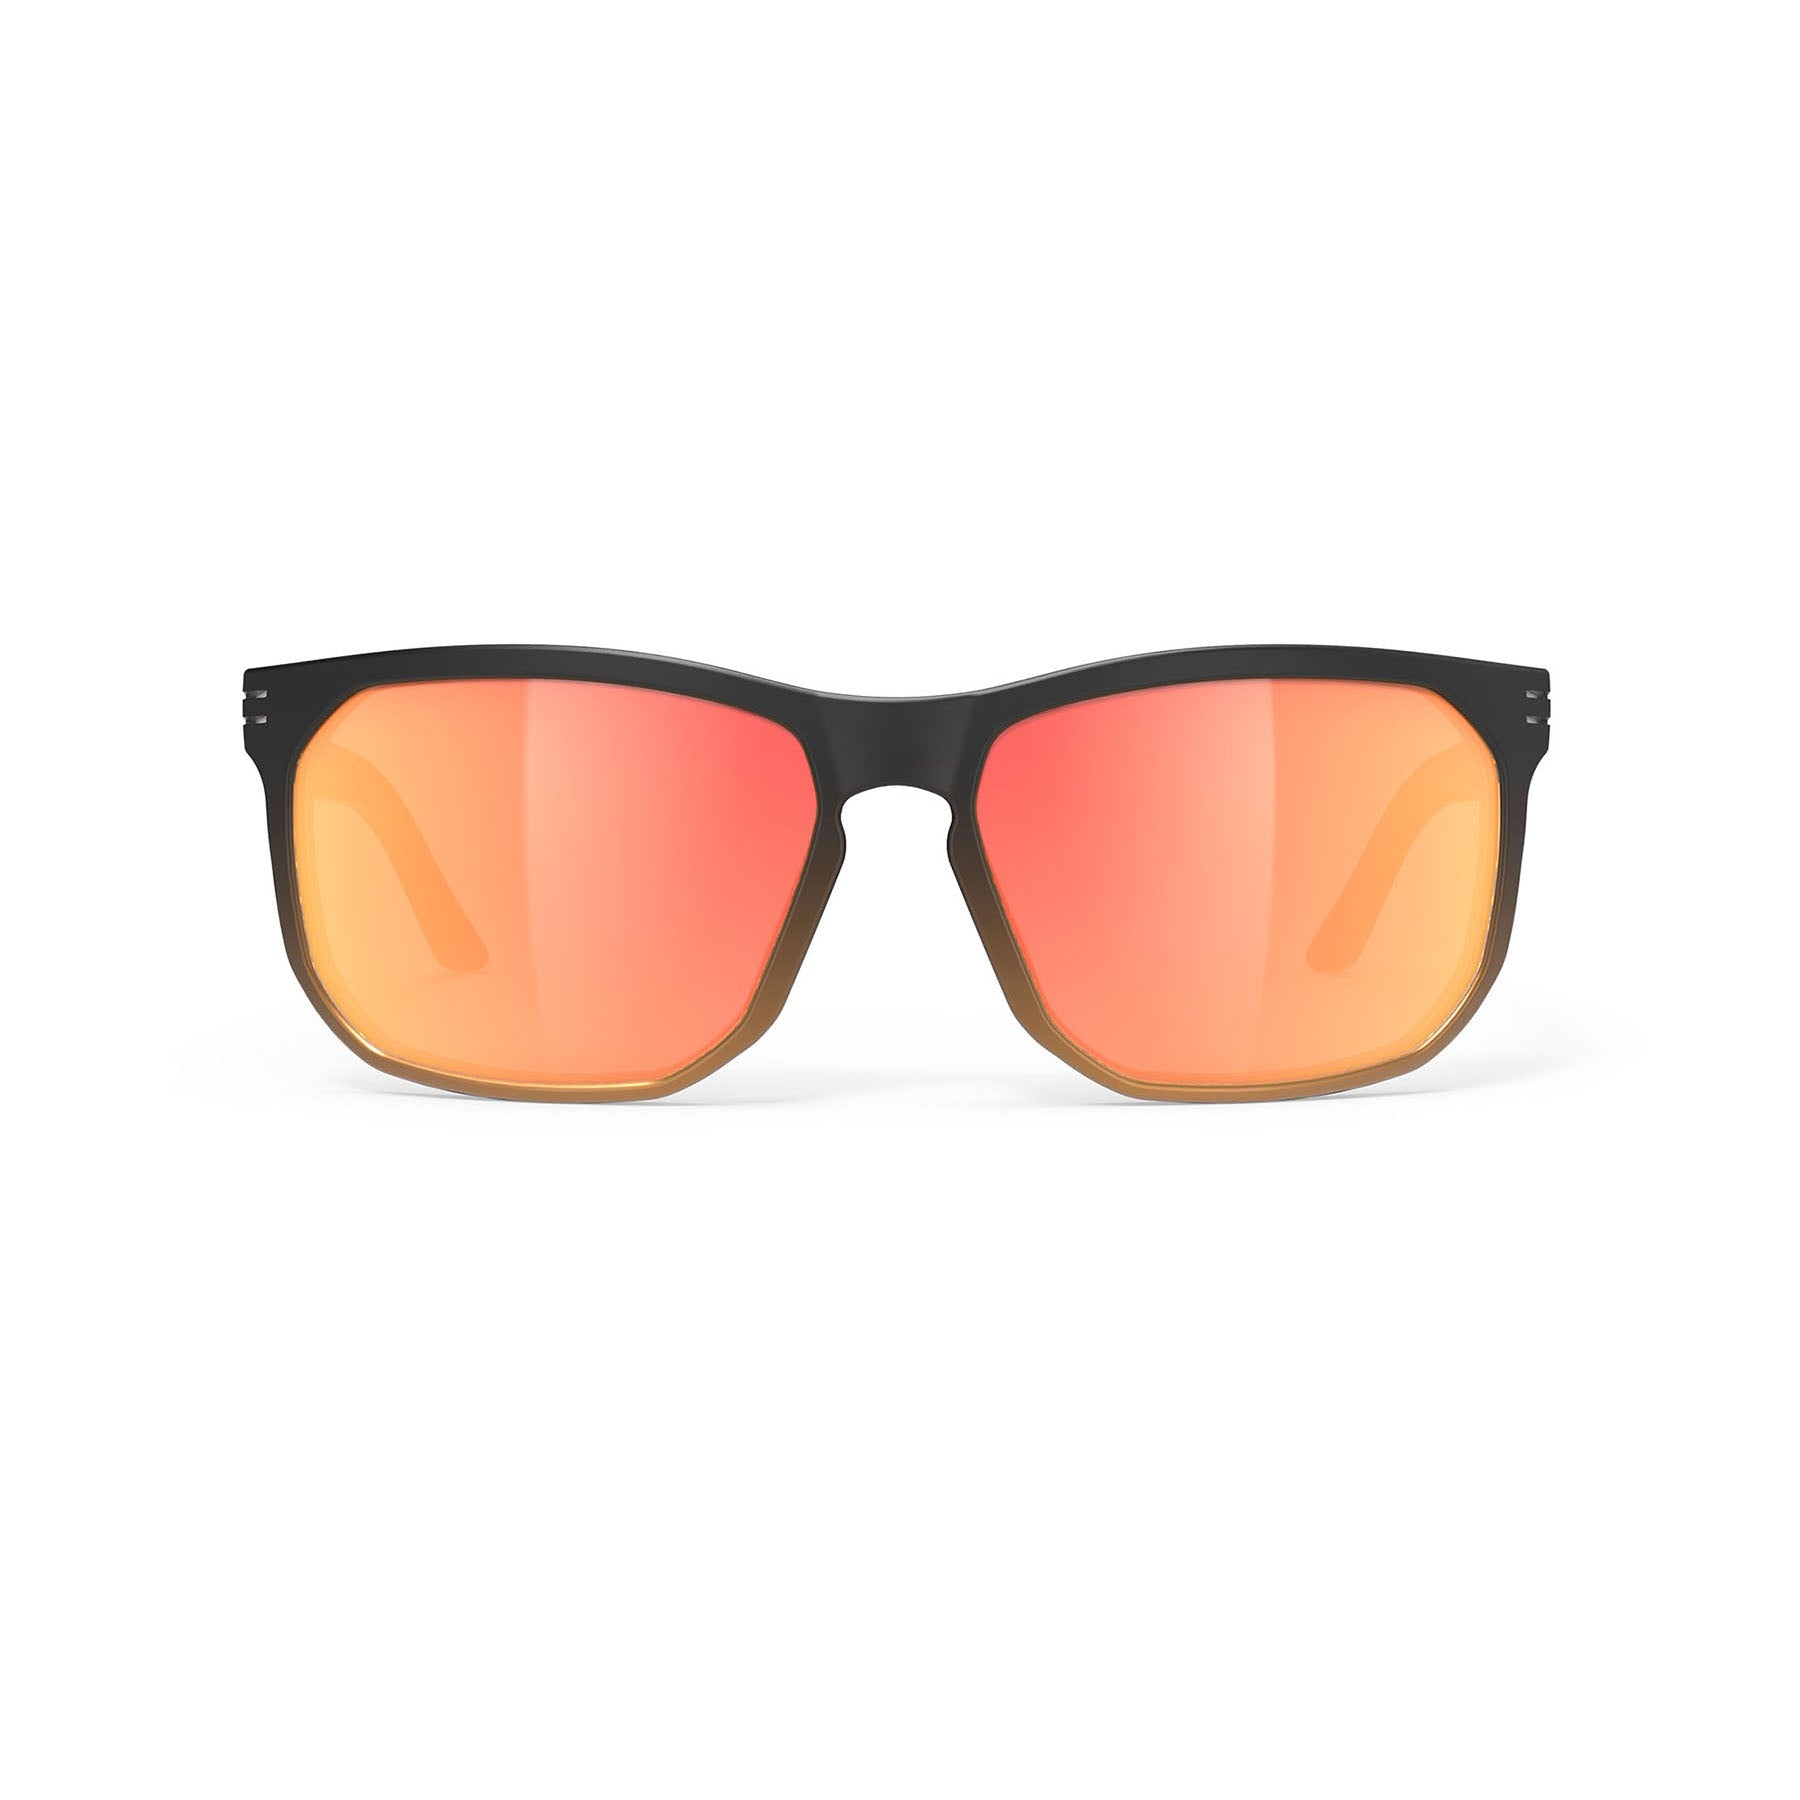 Rudy Project Soundrise lifestyle and beach prescription sunglasses#color_soundrise-black-fade-bronze-matte-with-multilaser-orange-lenses